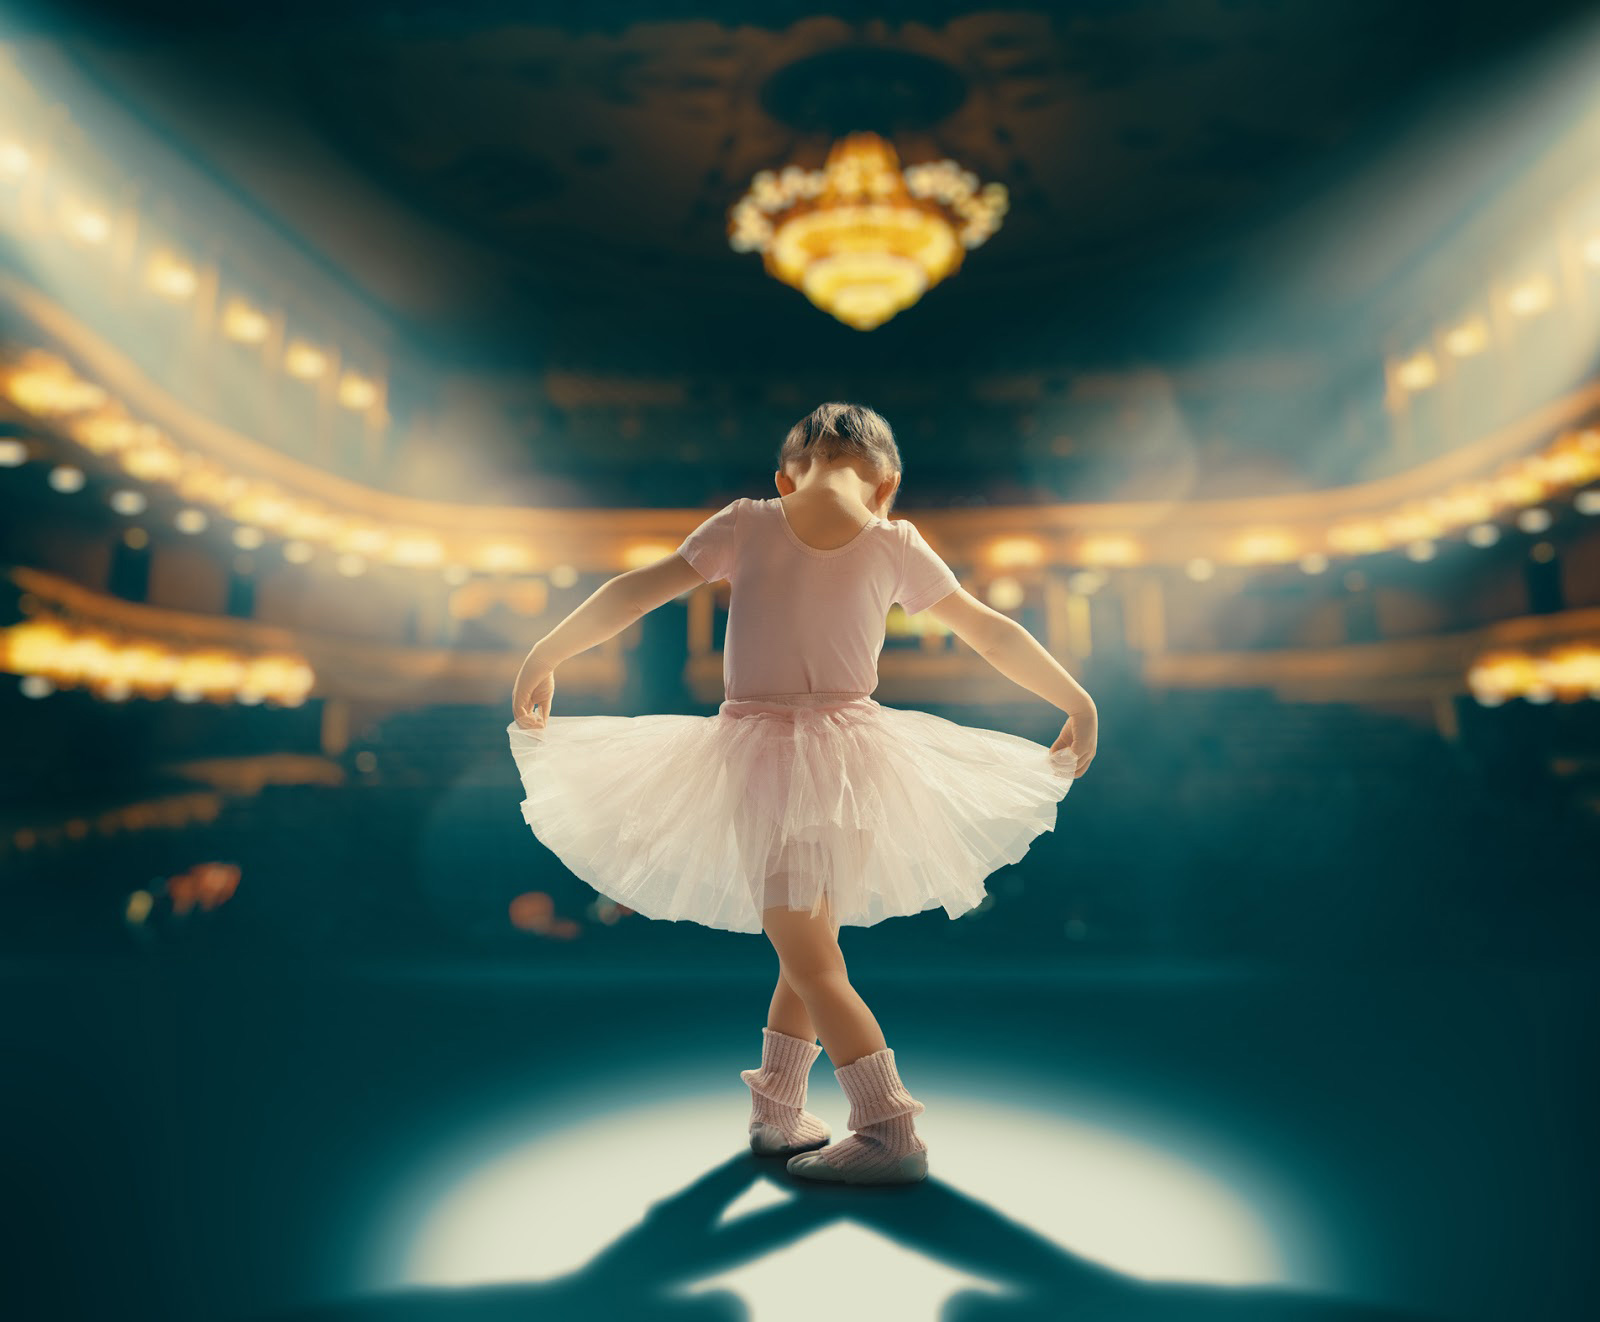 Cute little girl dreaming of becoming a ballerina